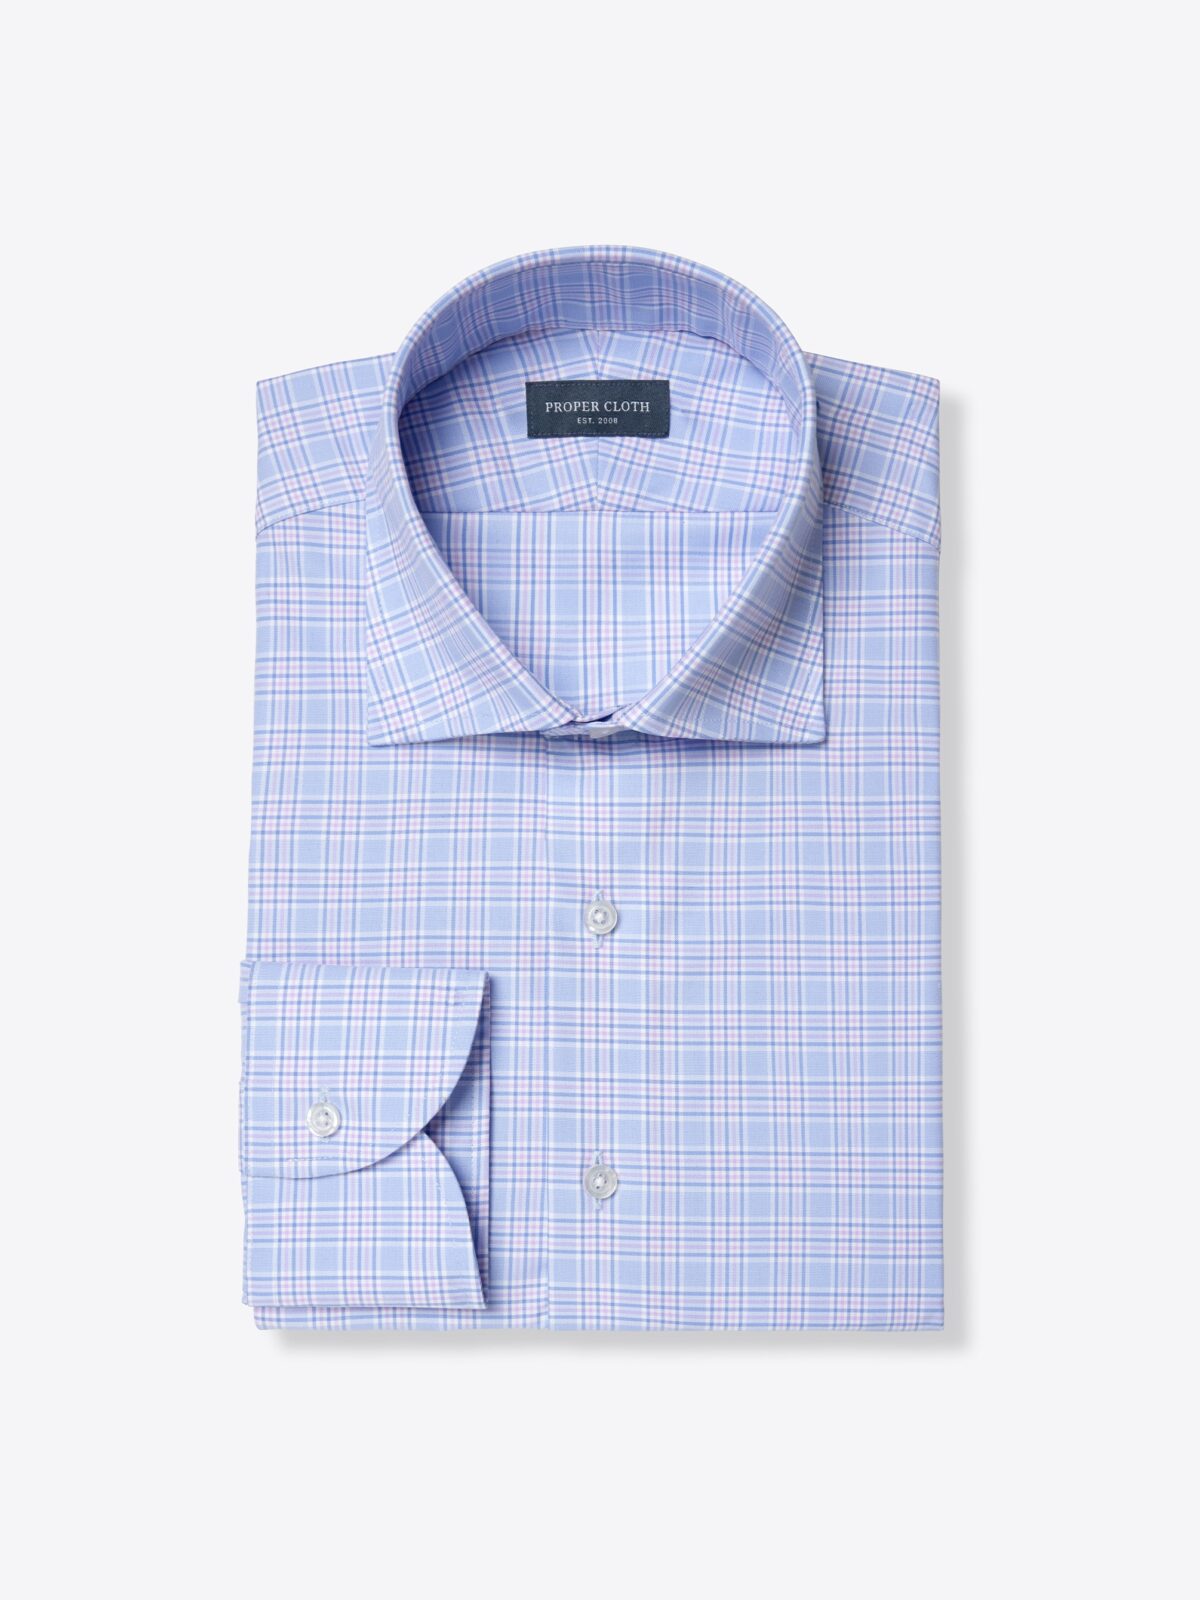 Thomas Mason WR Lavender and Blue Multi Check Shirt by Proper Cloth